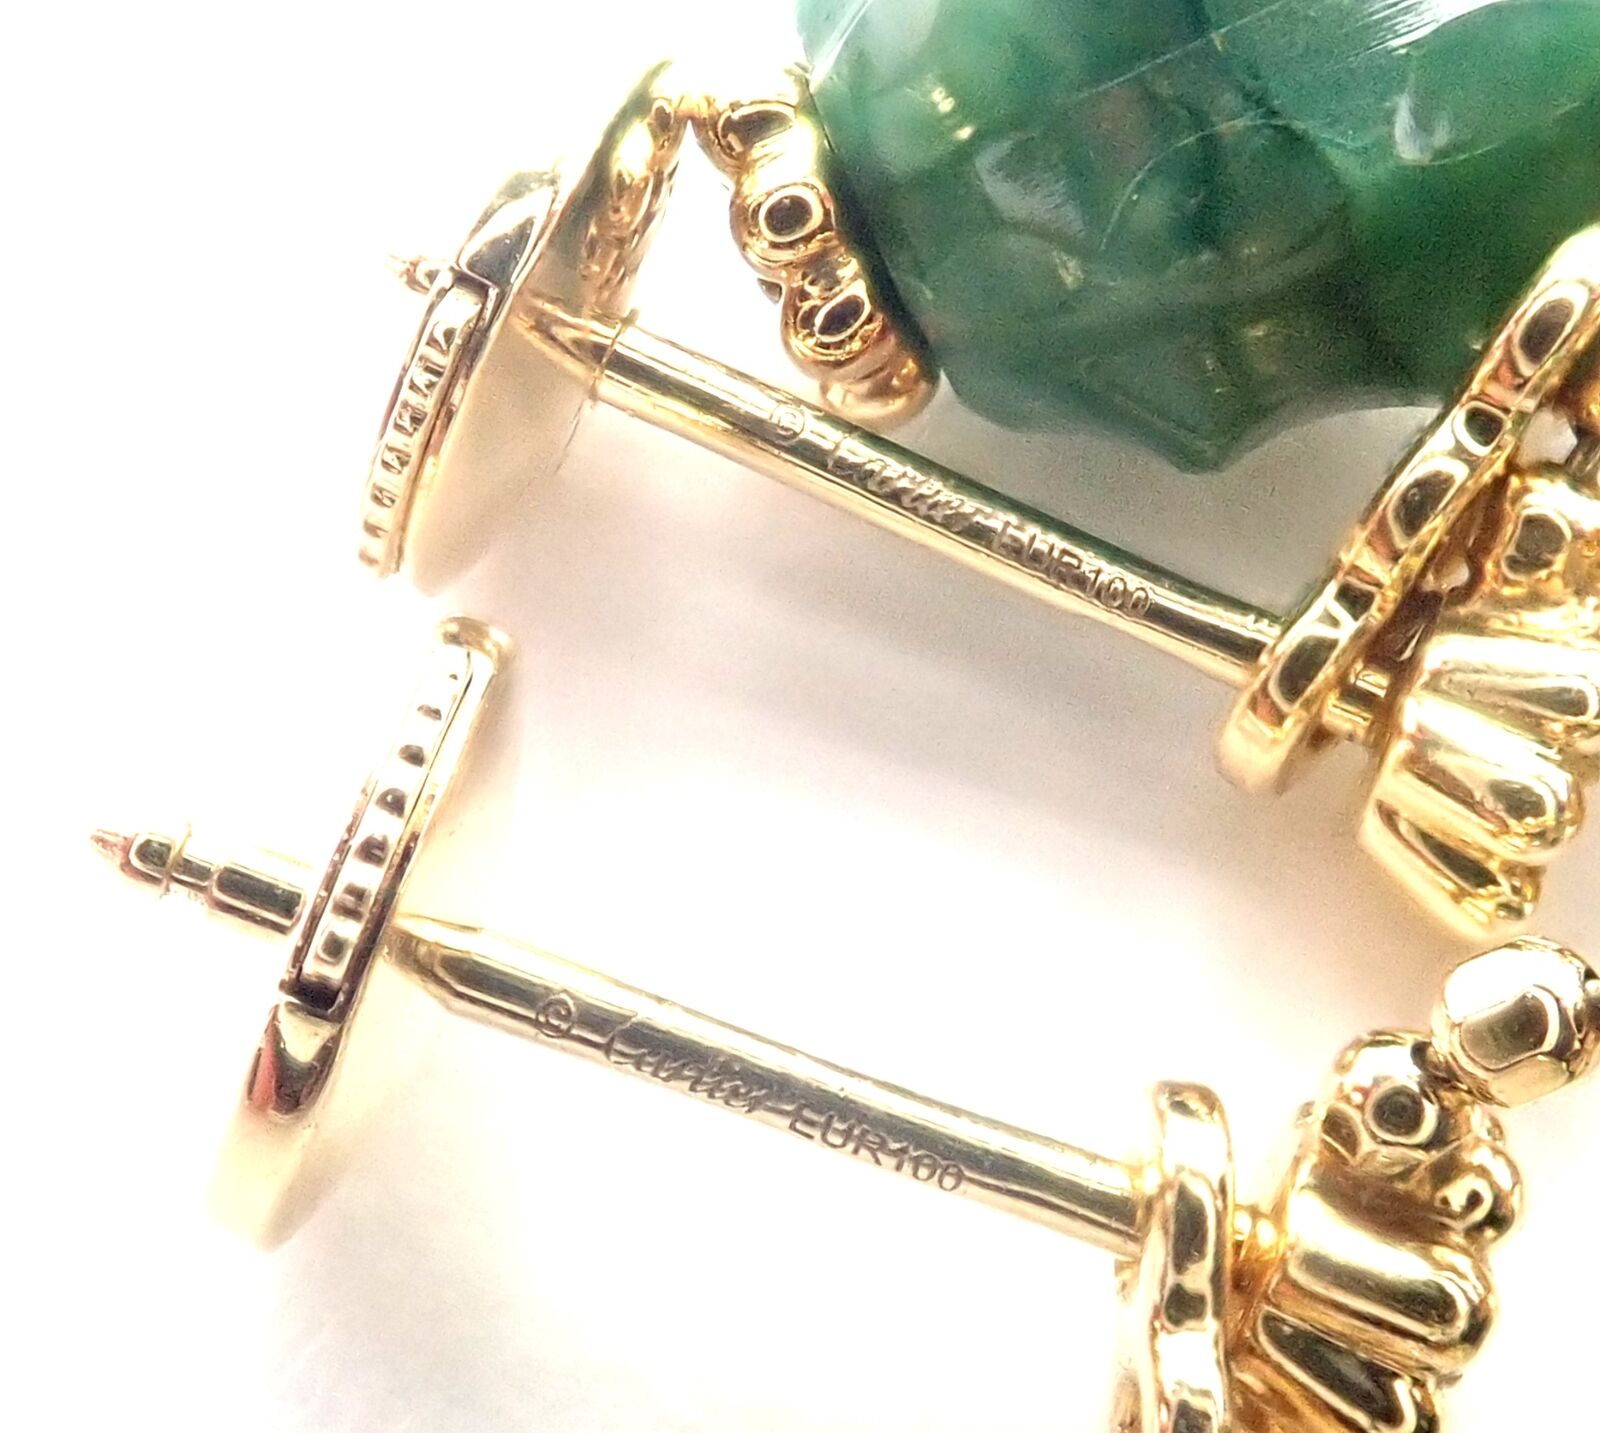 Cartier Jewelry & Watches:Fine Jewelry:Earrings Authentic! Cactus de Cartier 18k Yellow Gold Diamond Aventurine Earrings Cert.